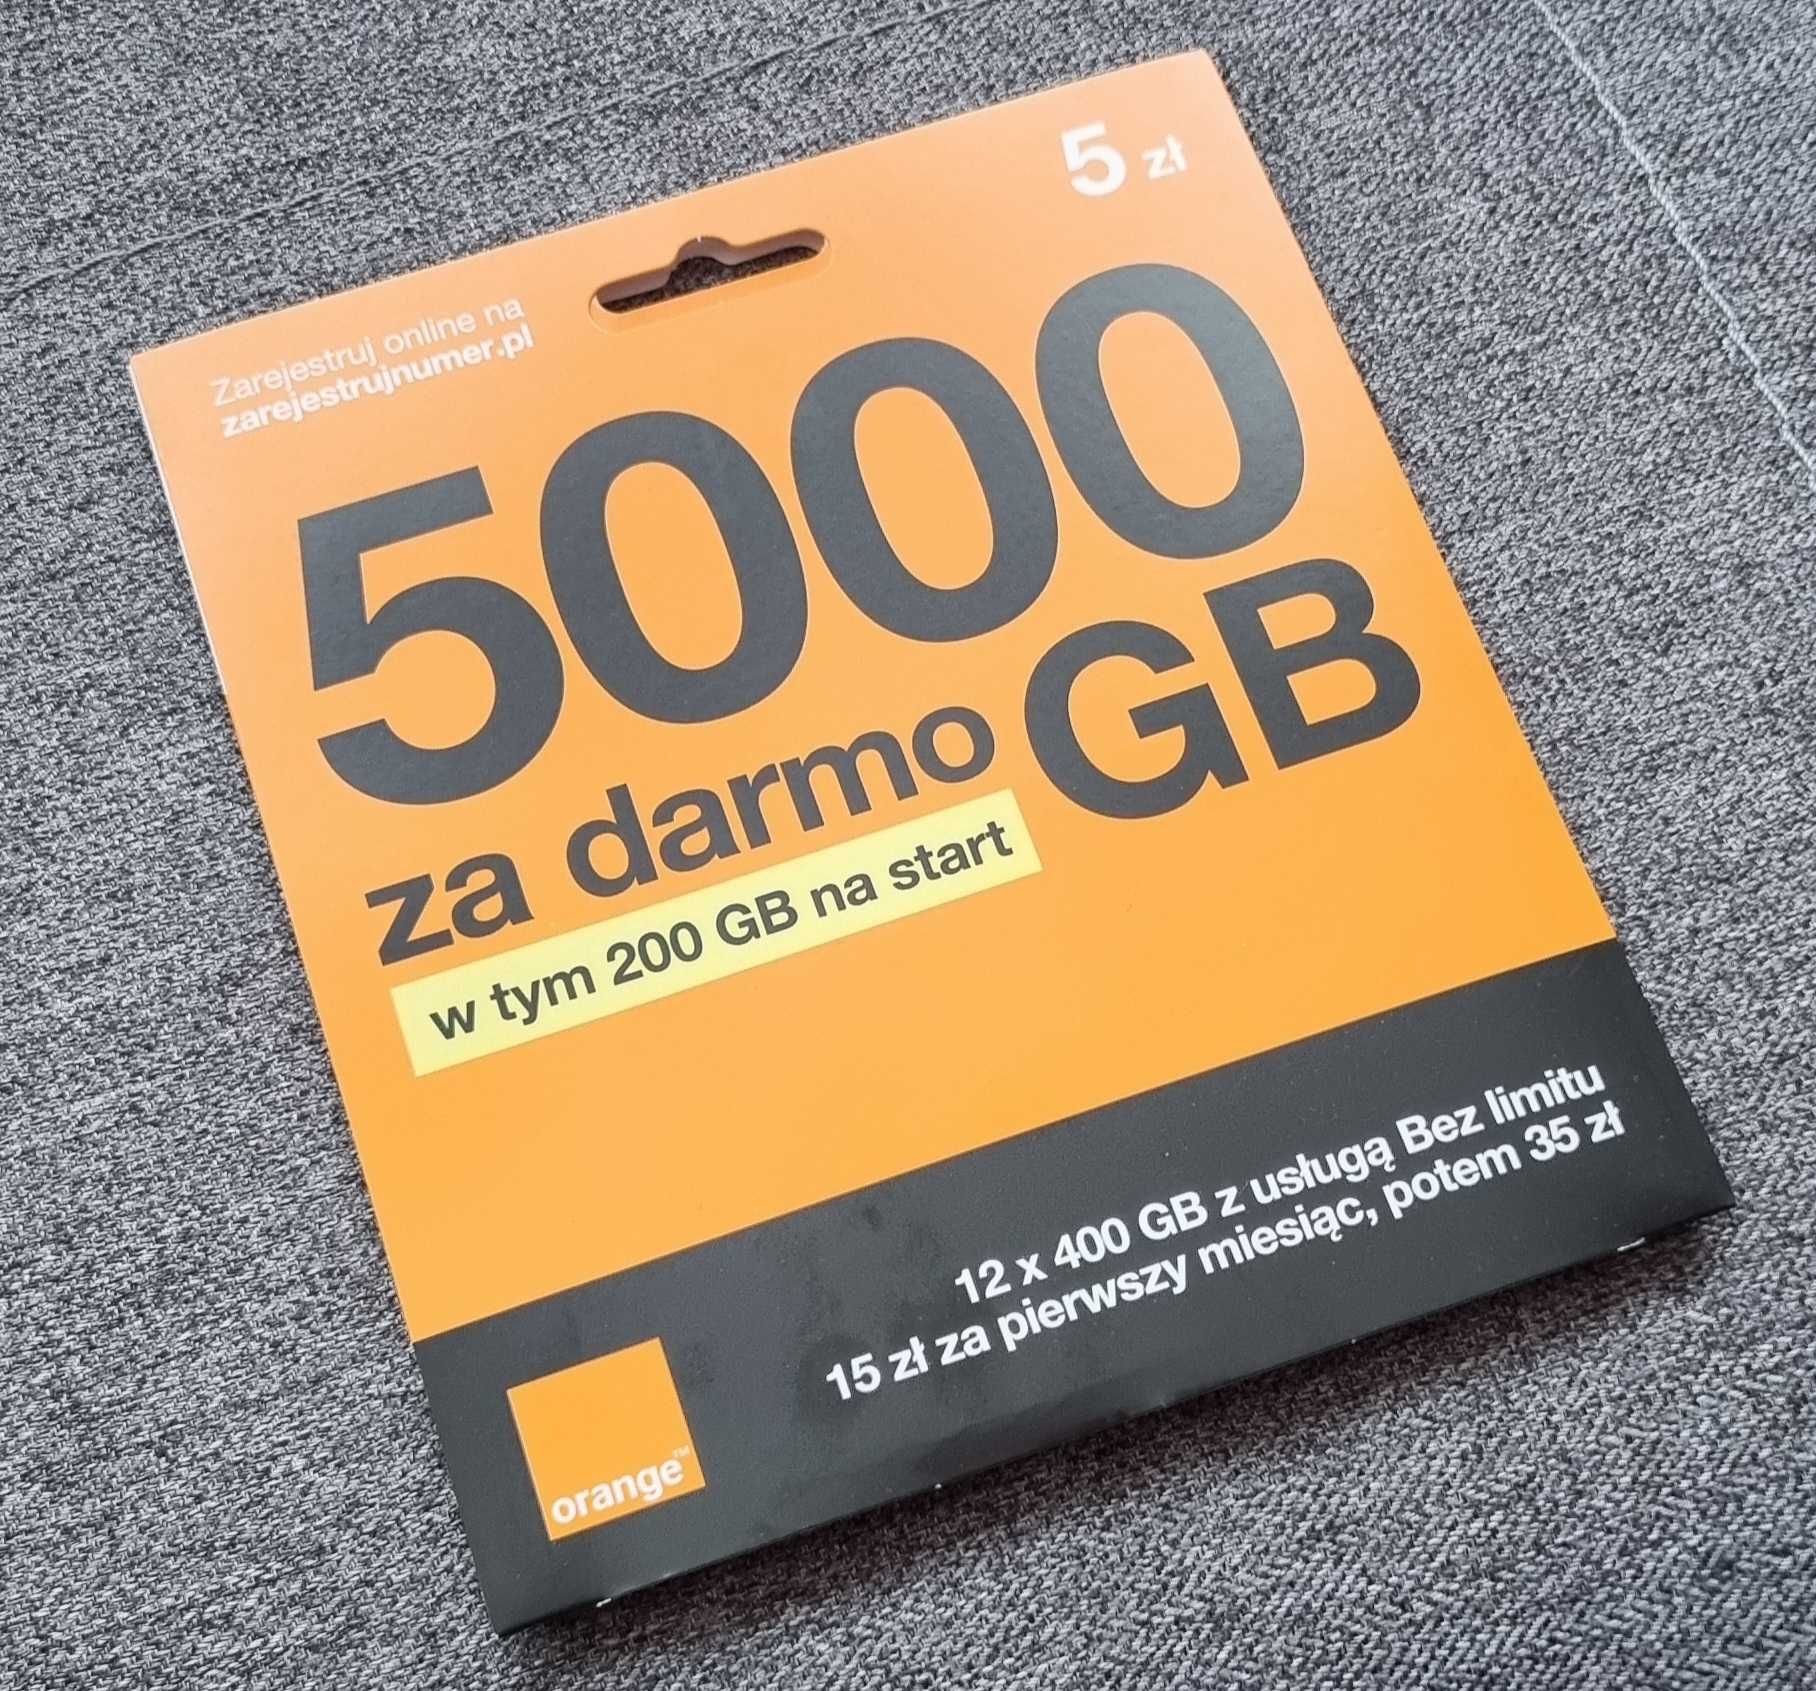 NOWY Starter Orange 5000 GB